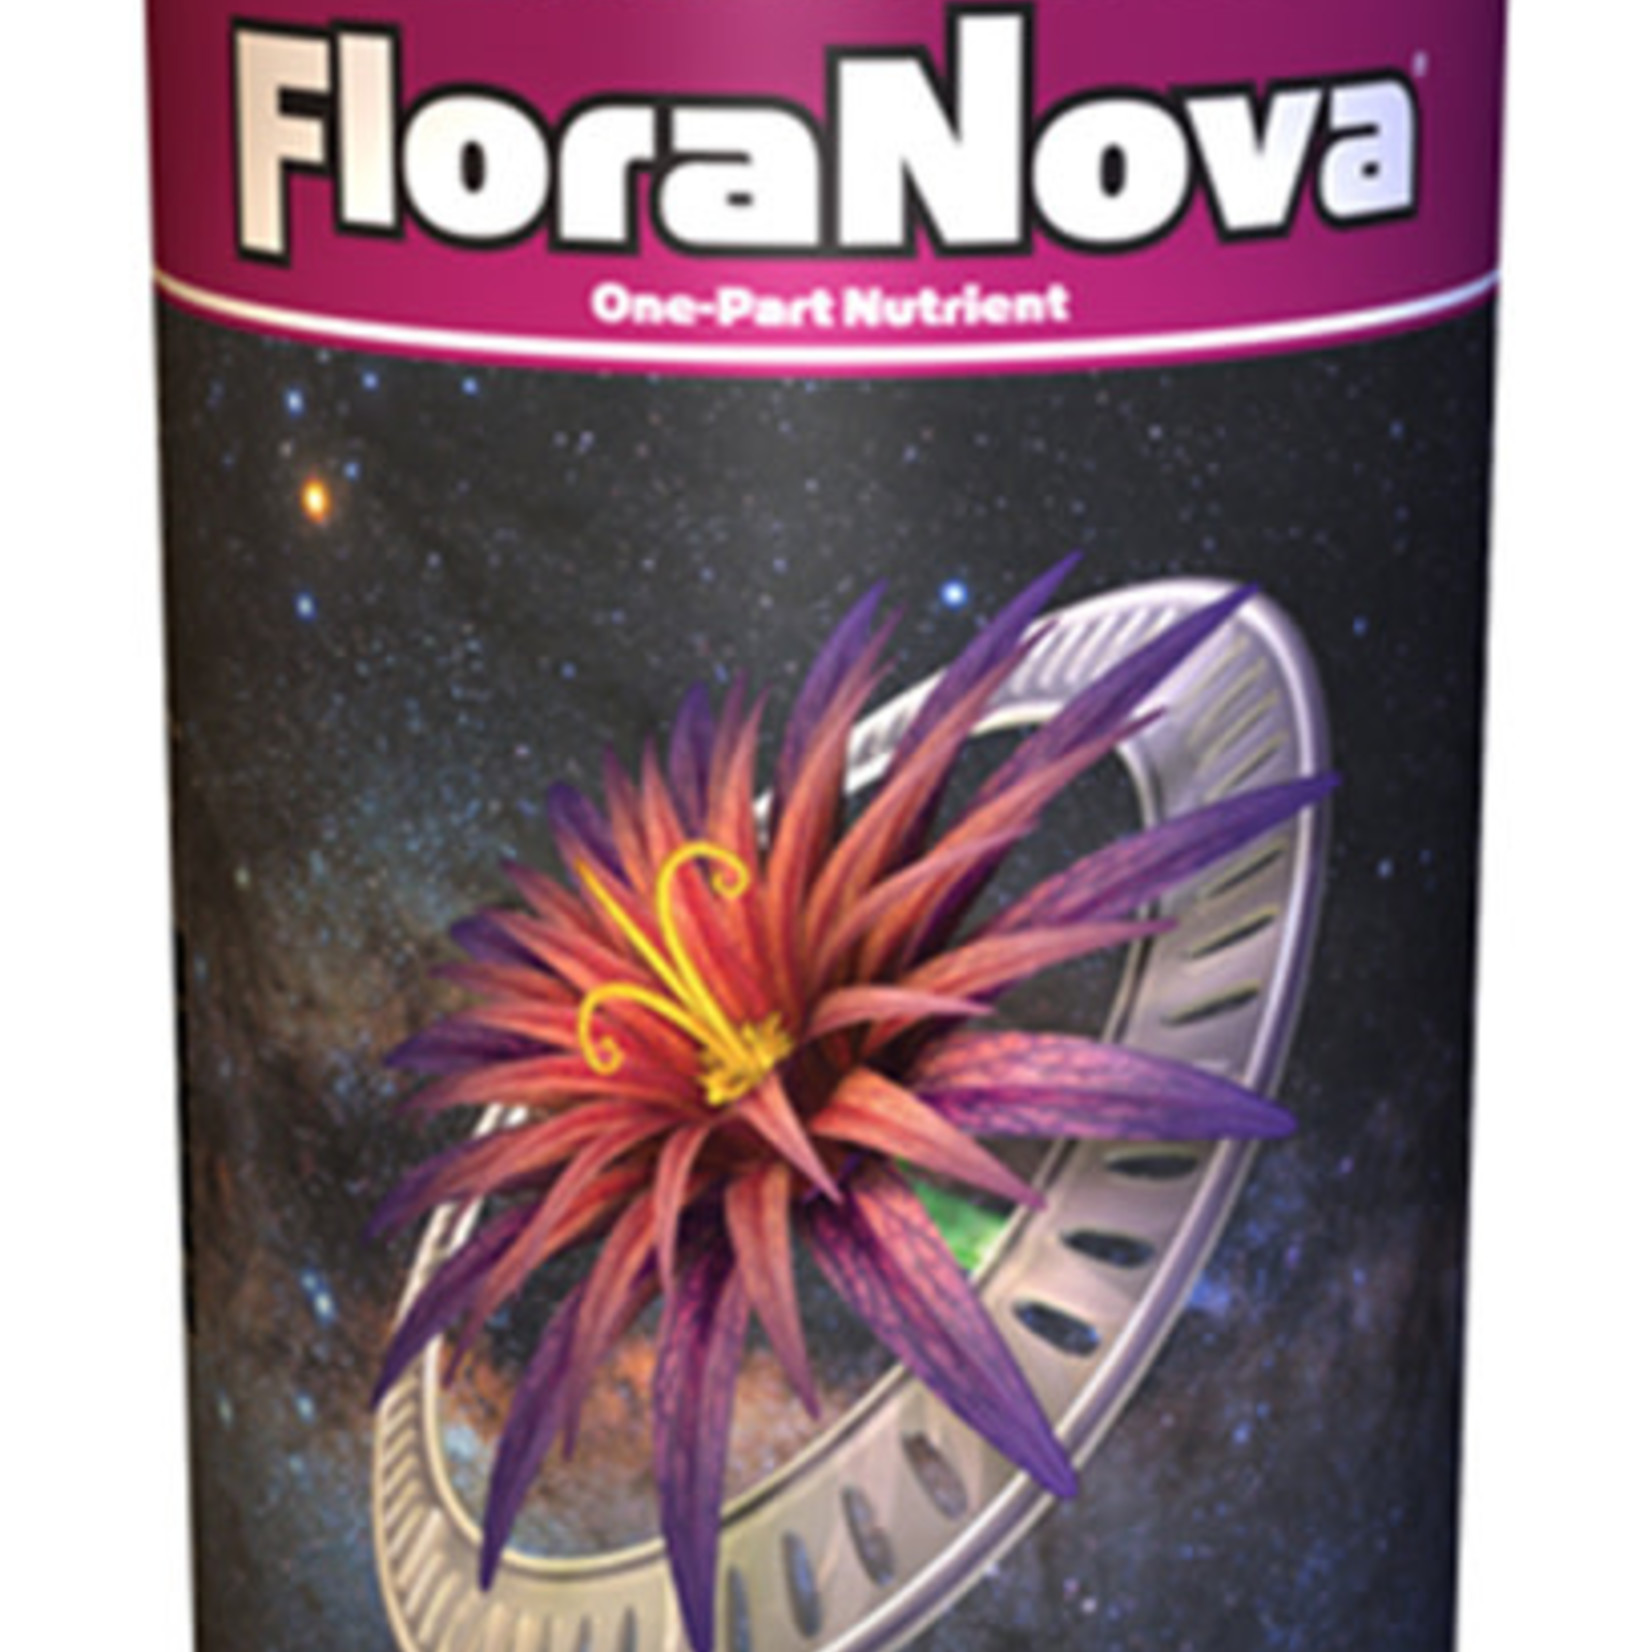 General Hydroponics GH FloraNova Bloom Quart